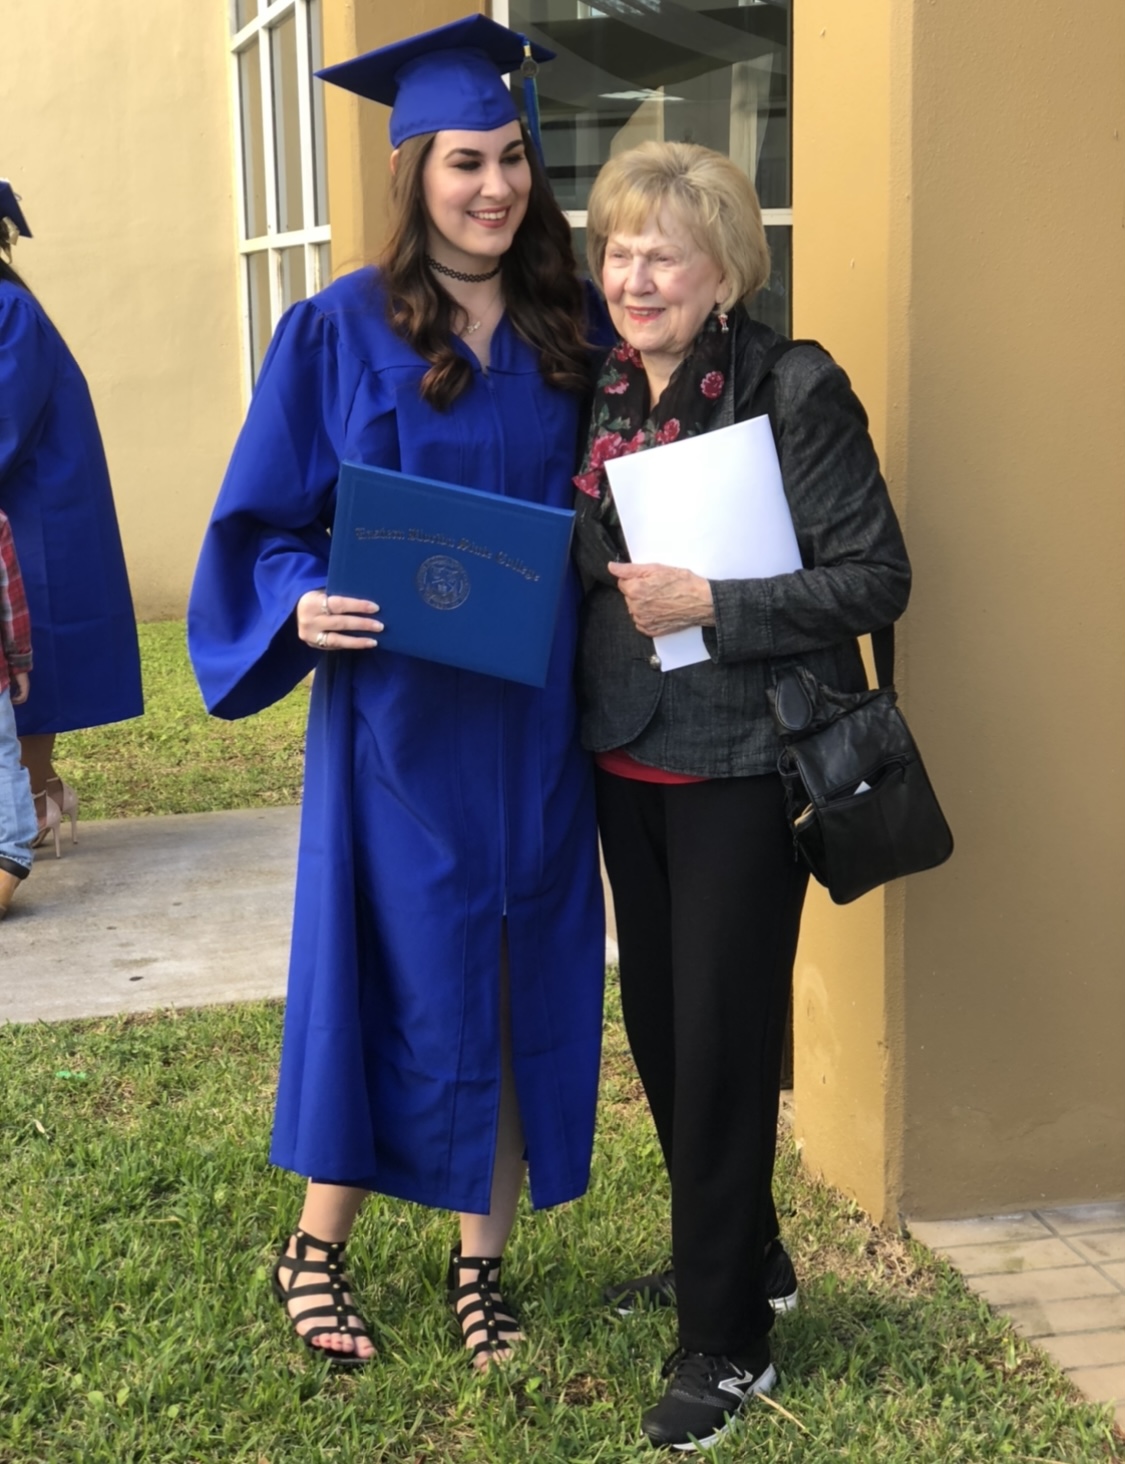 Gran at Leah’s graduation